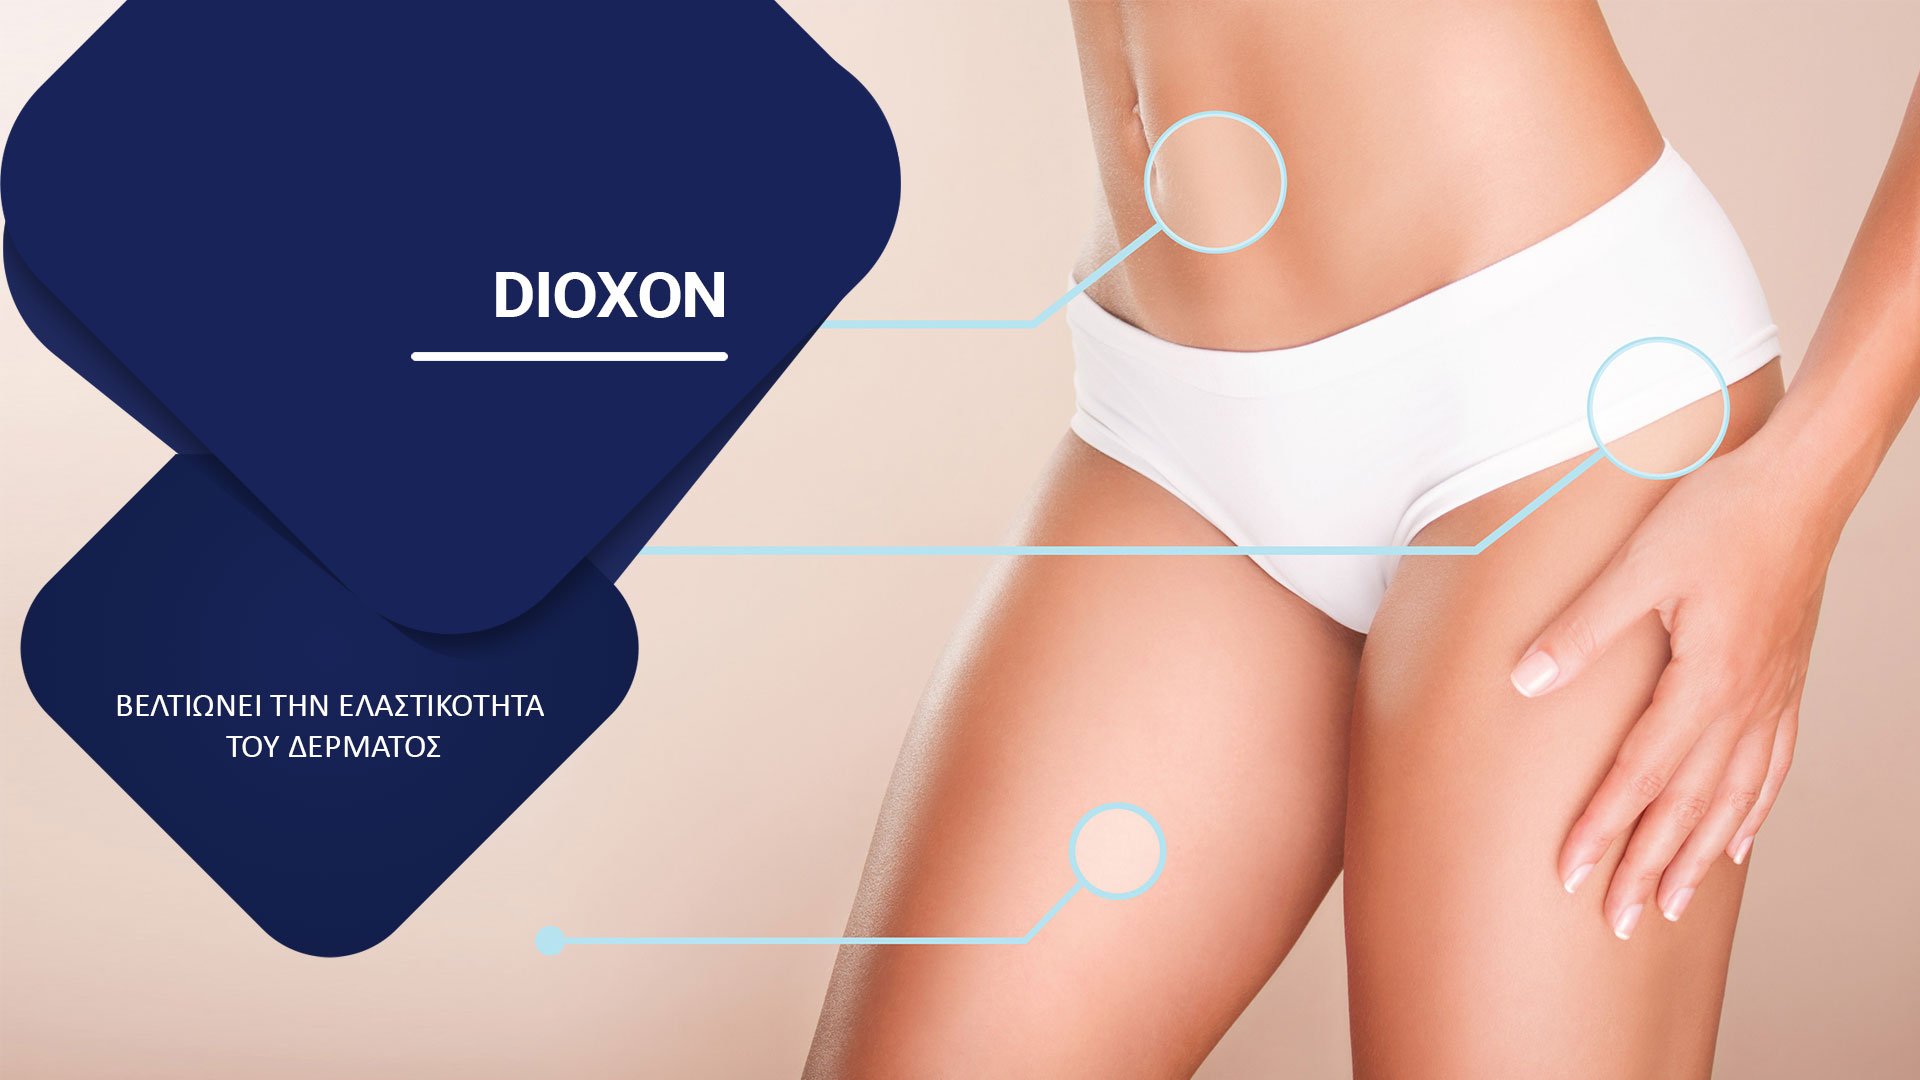 DIOXON-1